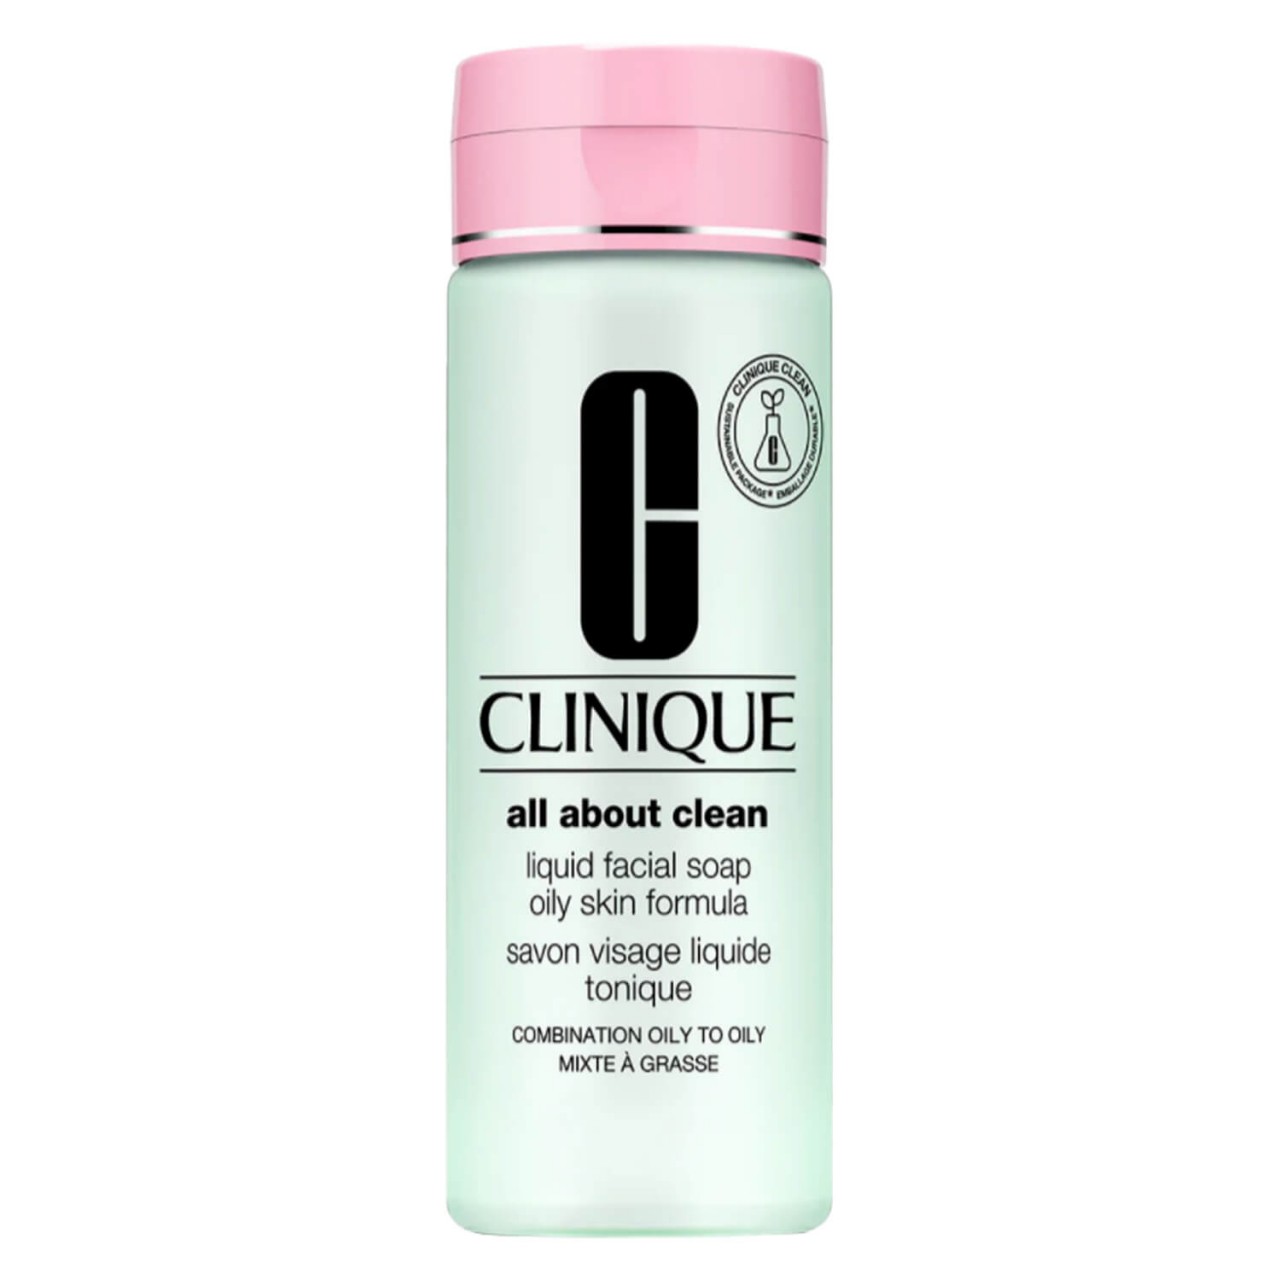 All About Clean - Liquid Facial Soap Oily Skin von Clinique